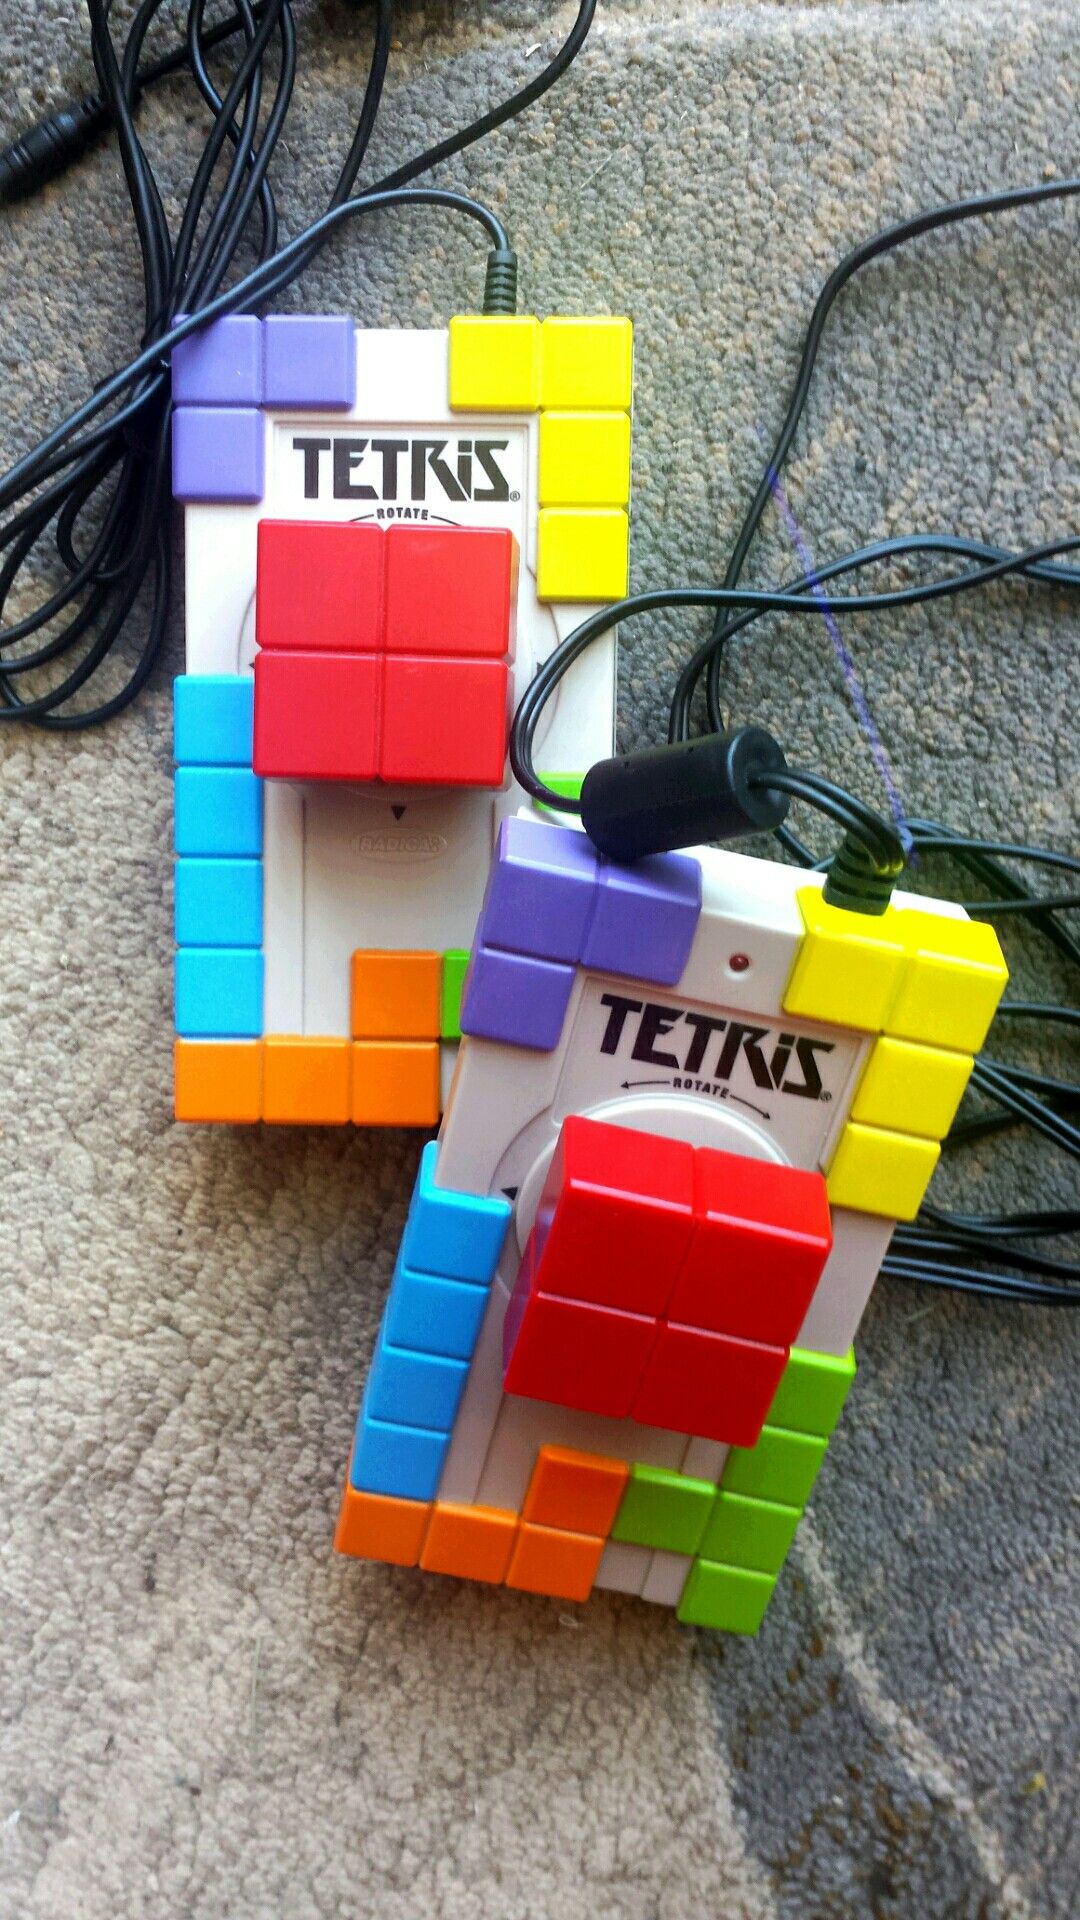 Tetris Plug and Play Radica Video Game Hand Held